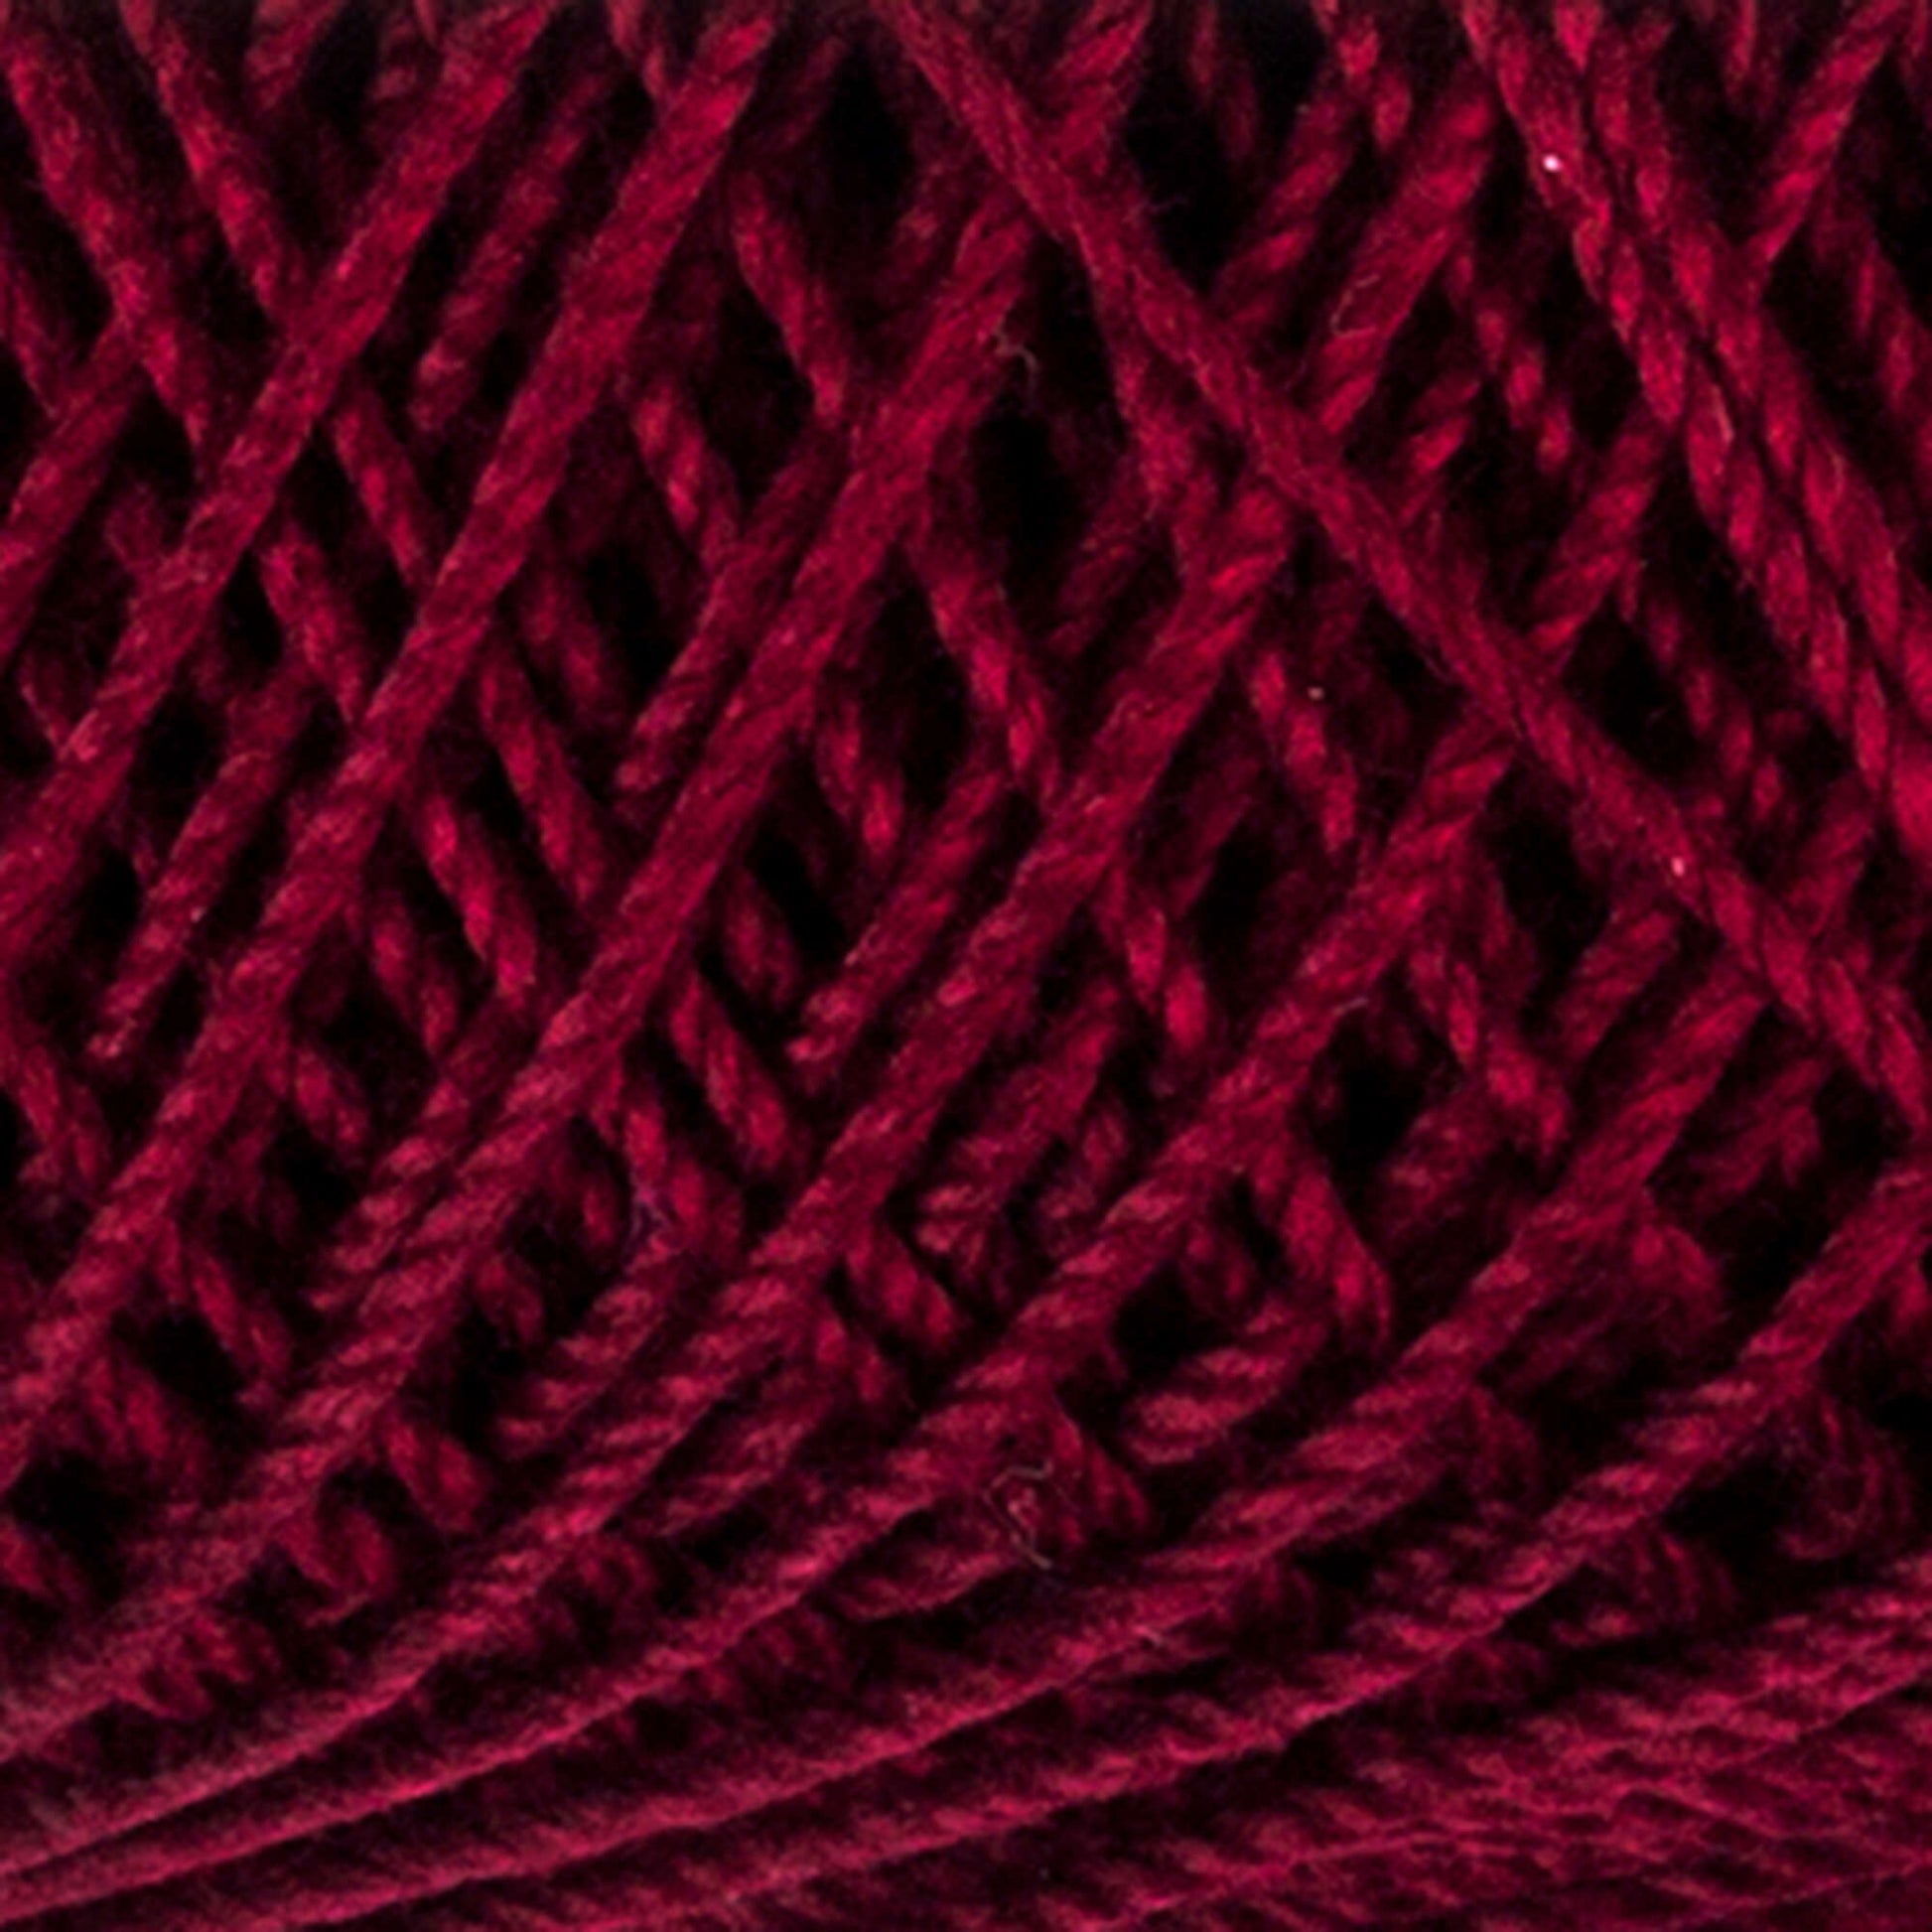 Red Heart Classic Crochet Thread Size 10